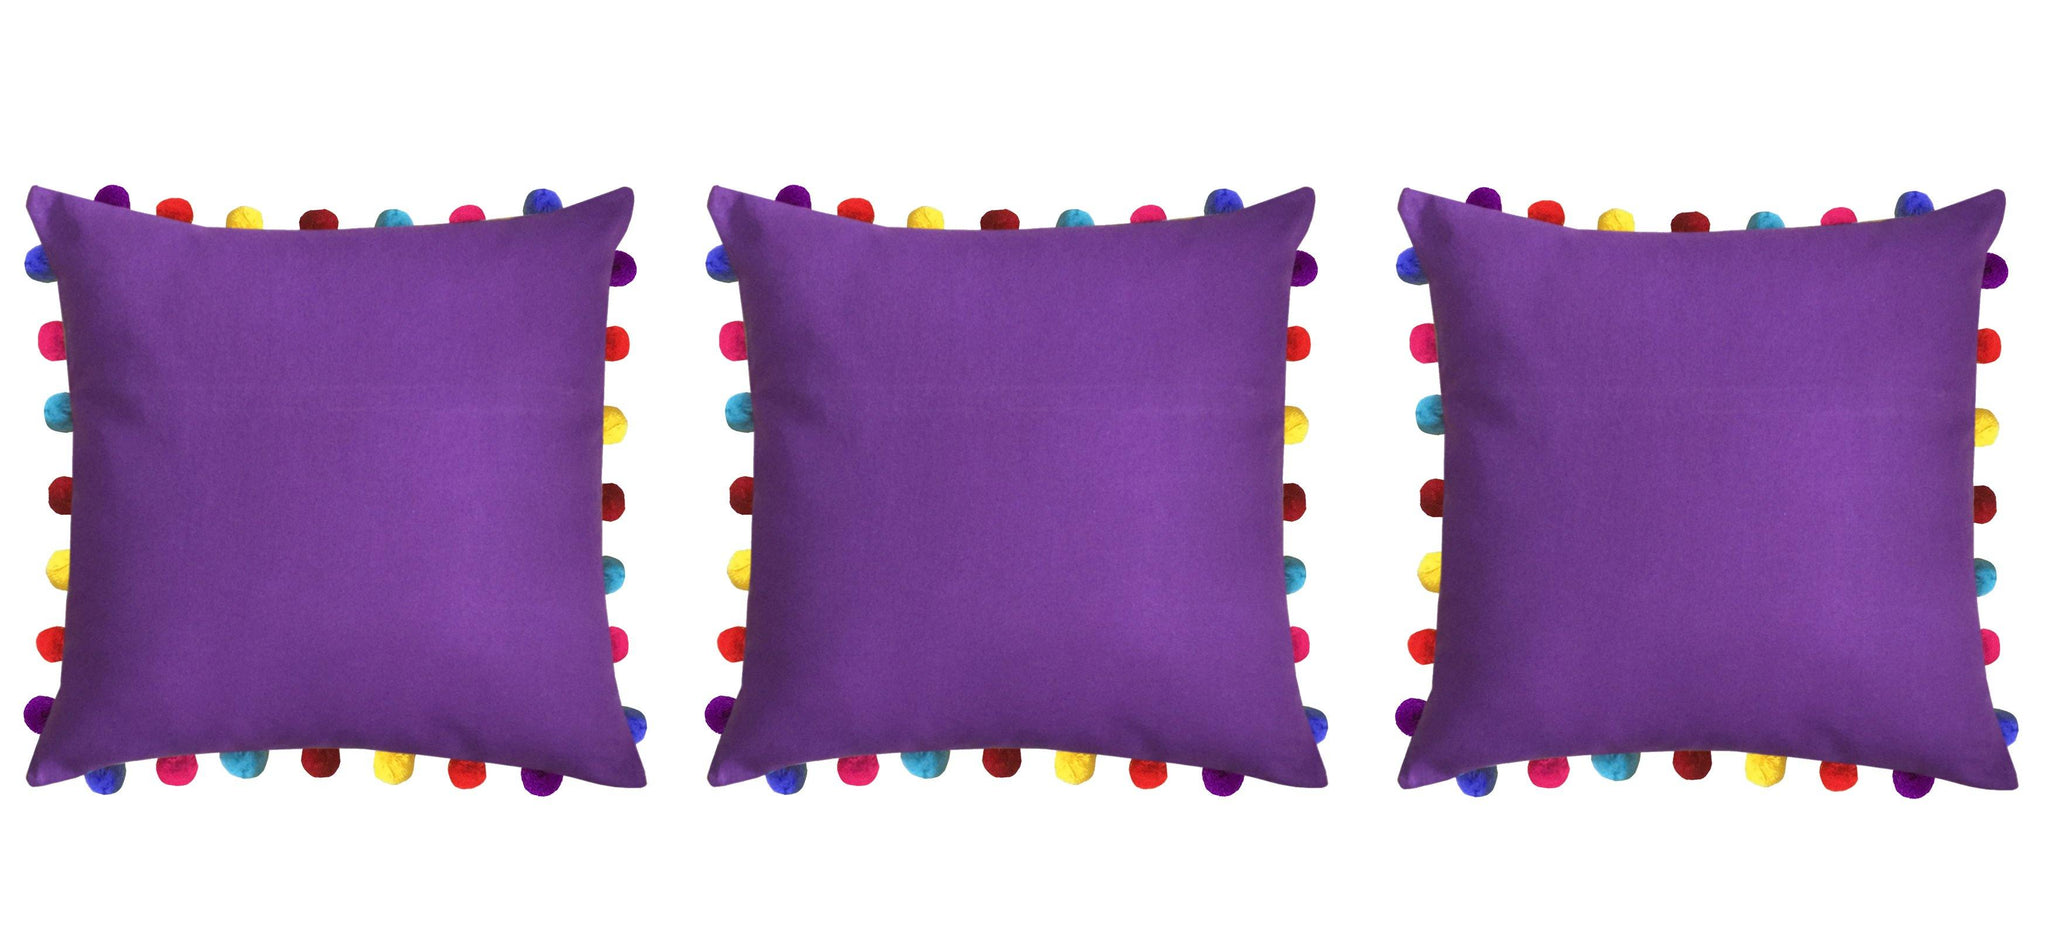 Lushomes Royal Lilac Cushion Cover with Colorful Pom Poms (3 pcs, 20 x 20”) - Lushomes